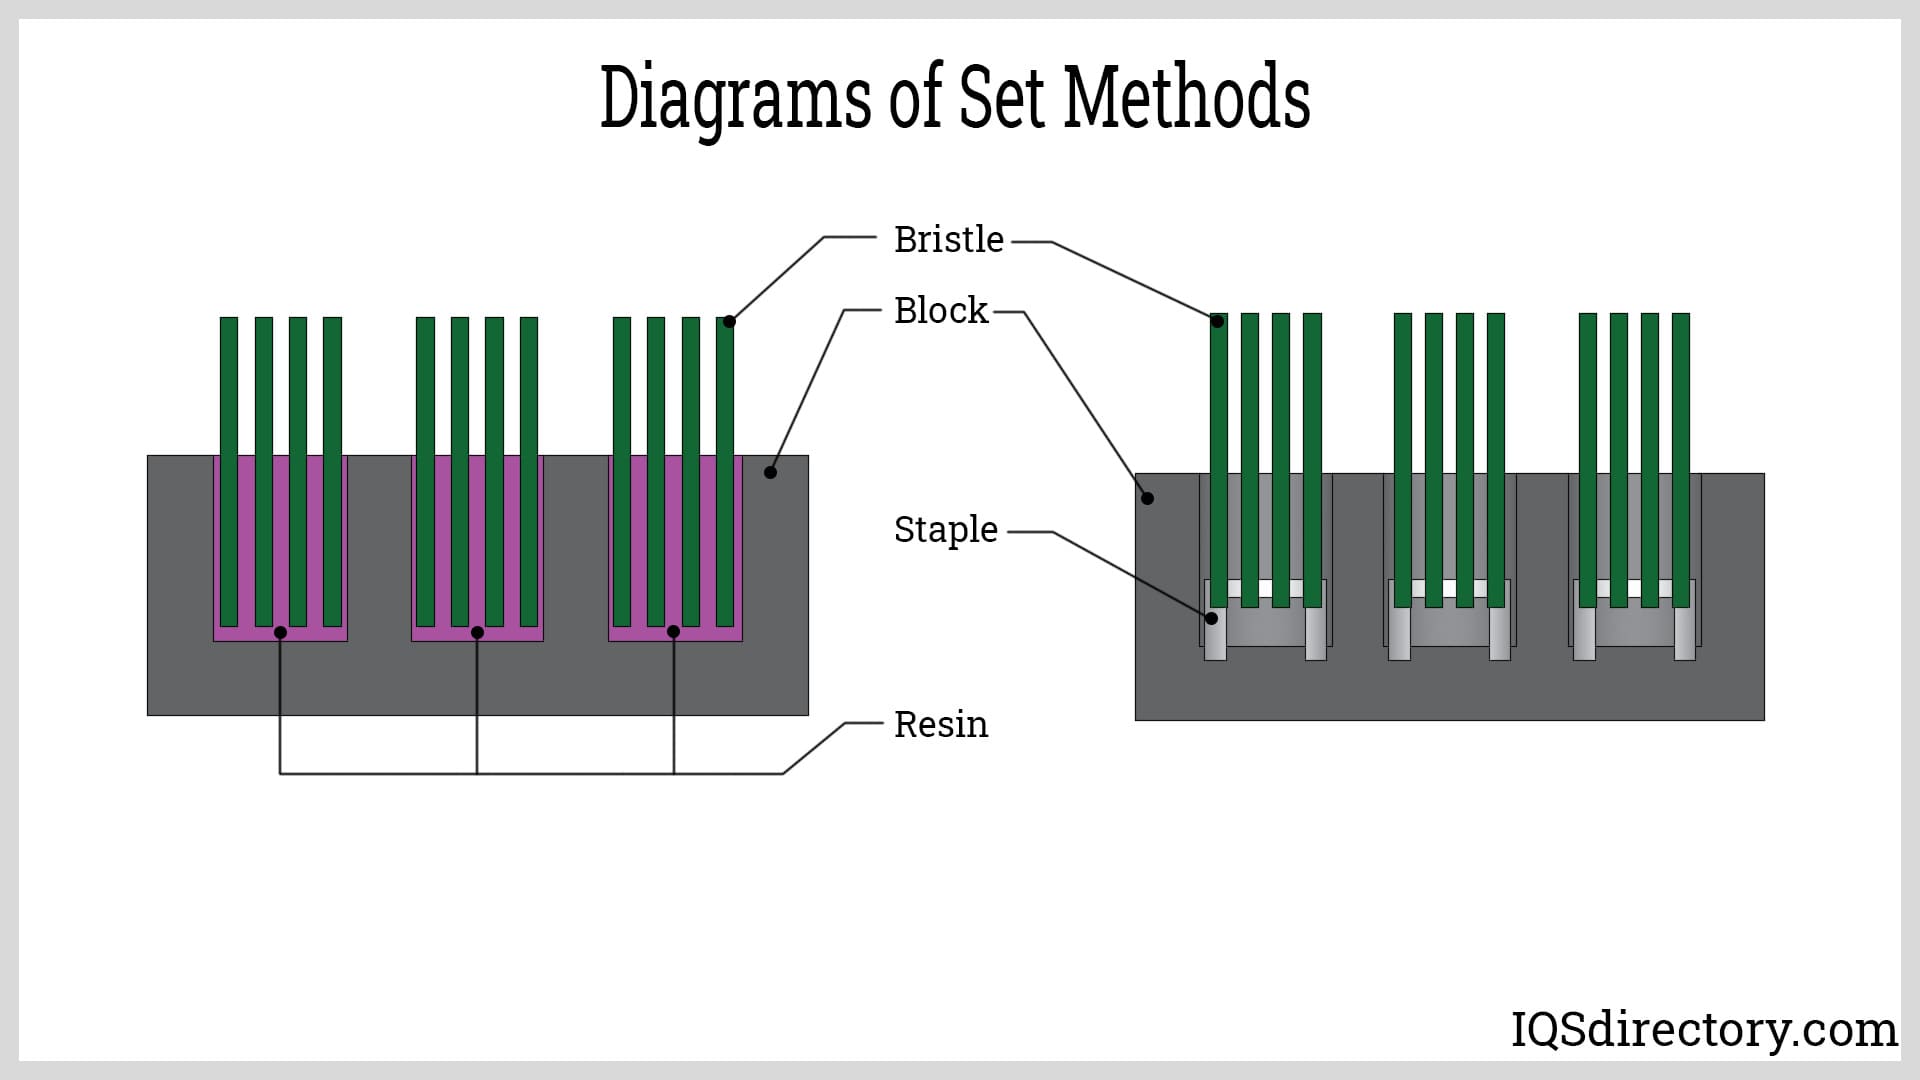 Diagrams of Set Methods